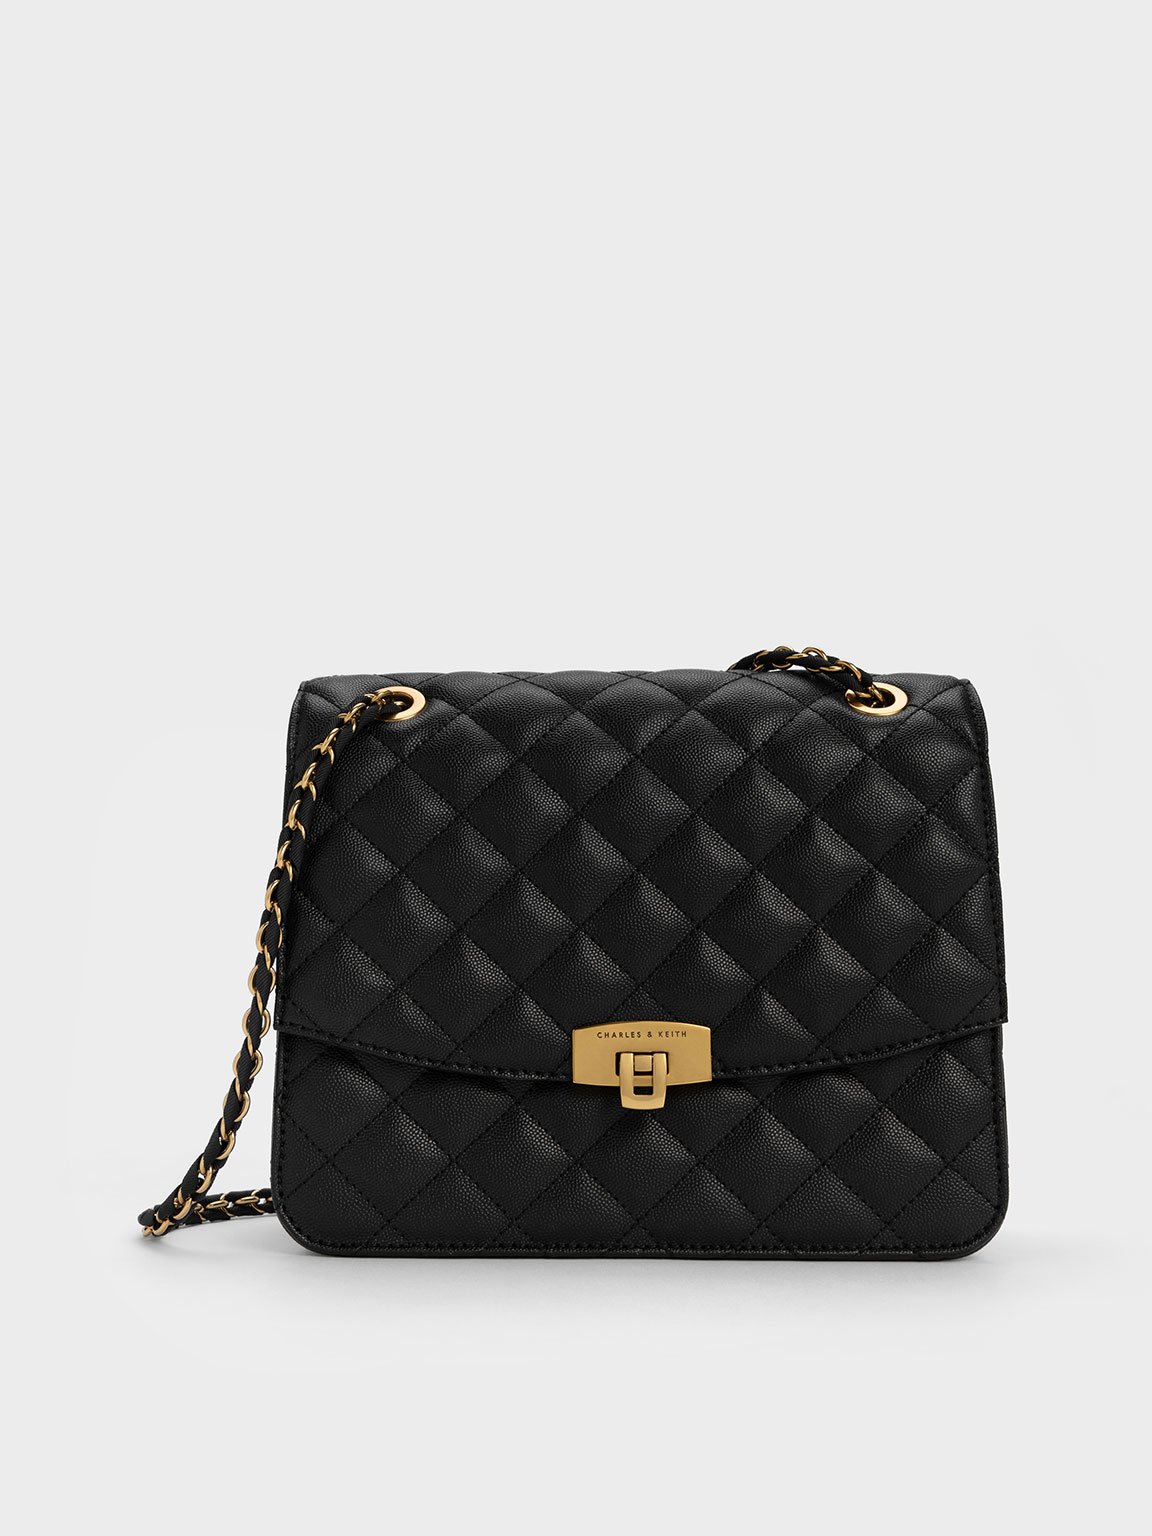 Luxury Consignment Boutique - Designer Handbags & Clothing – The